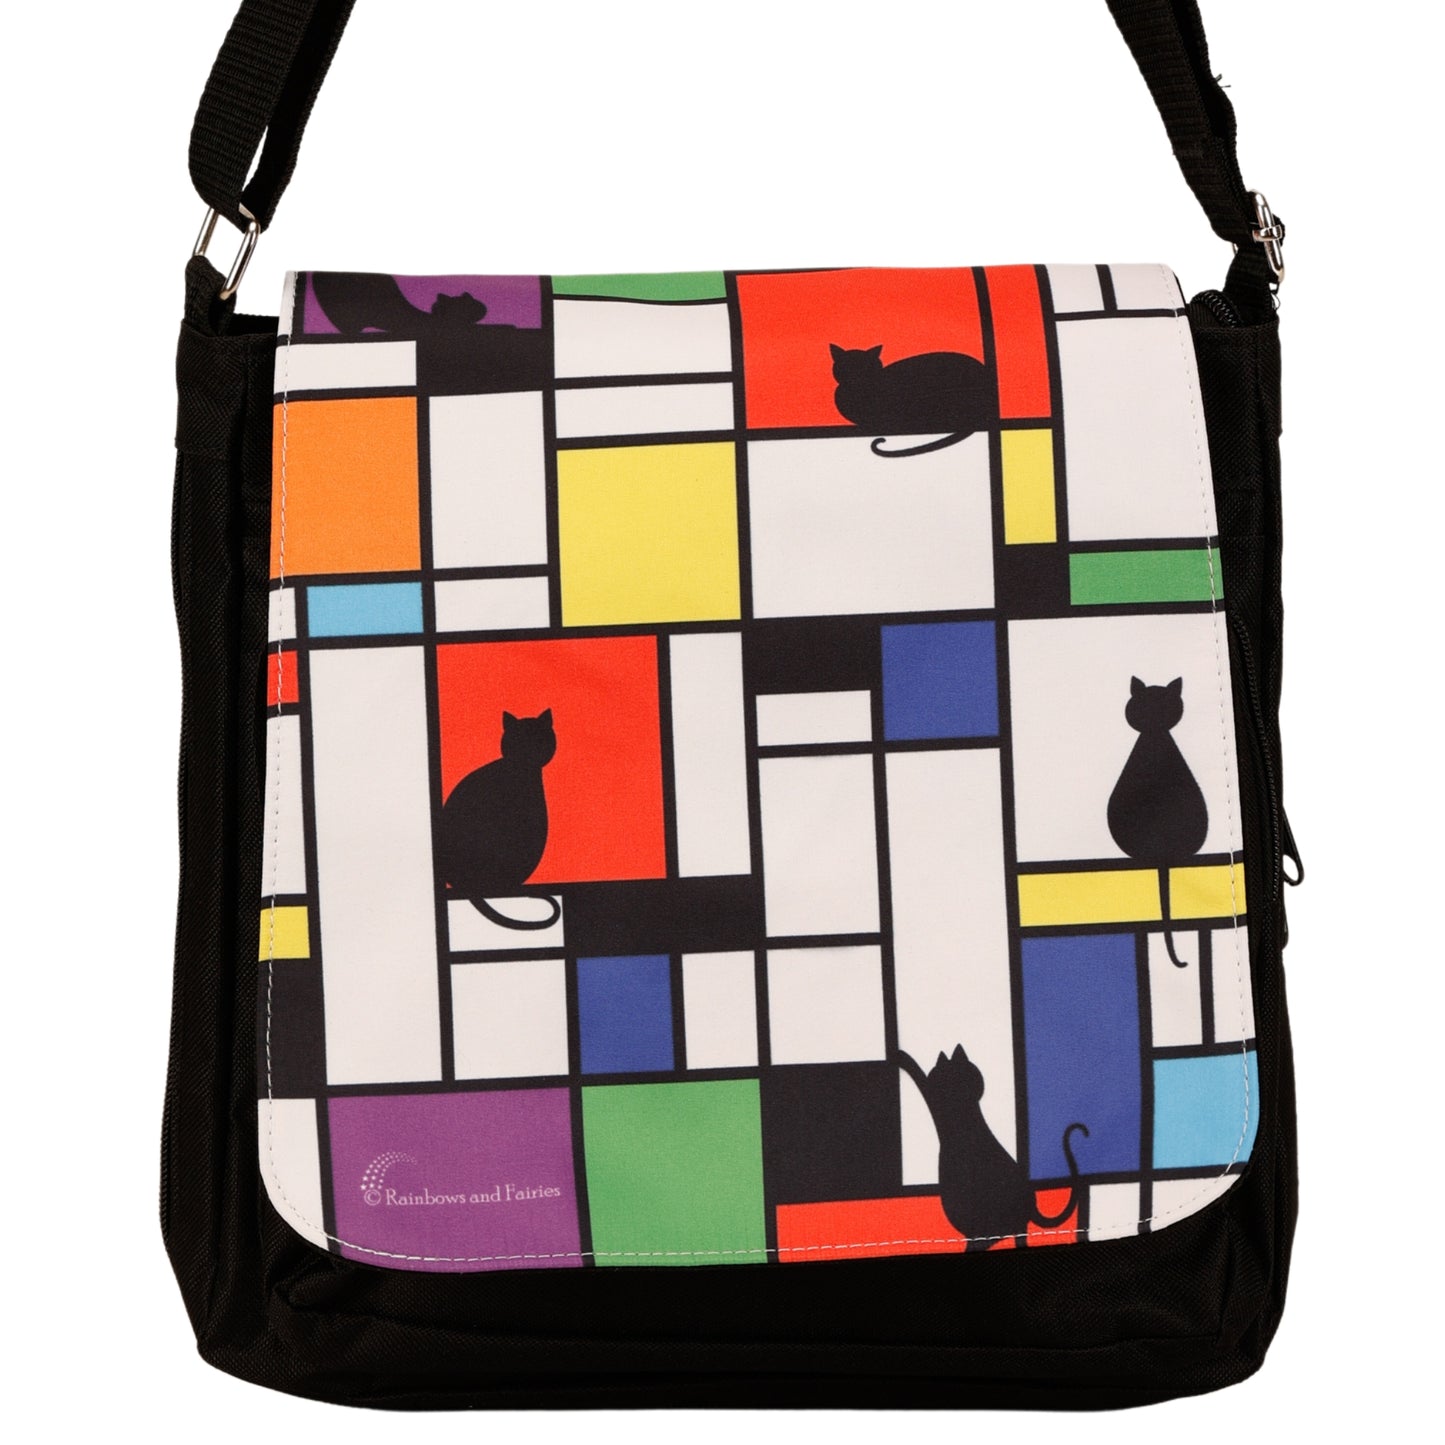 Intrigue Messenger Bag by RainbowsAndFairies.com.au (Mondrian Art - Black Cats - Colour Blocks - Satchel Bag - Interchangeable Cover - Handbag) - SKU: BG_SATCH_INTRG_ORG - Pic-02